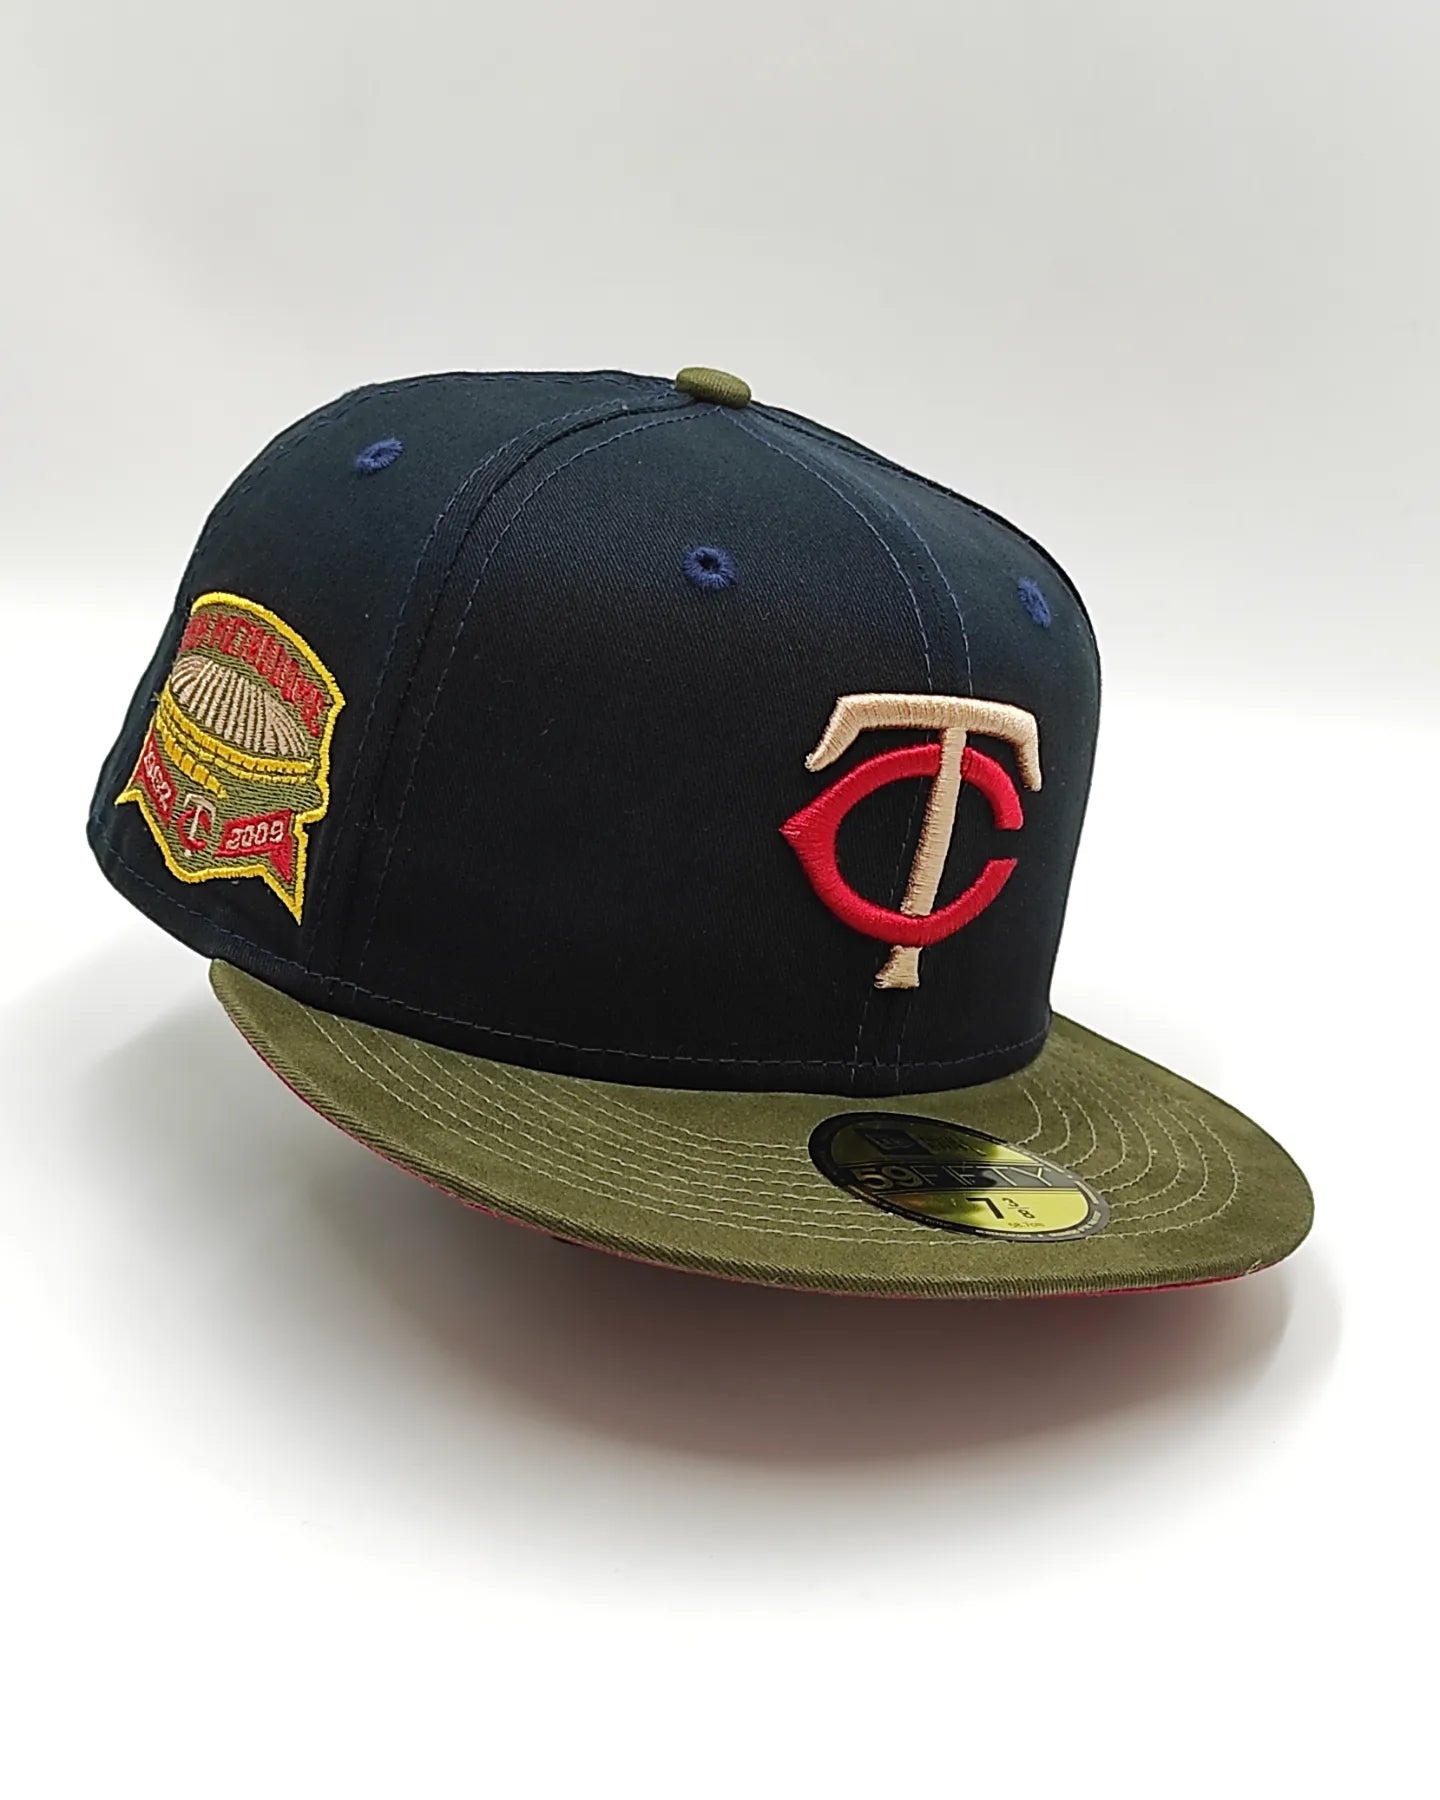 New Era 59fifty fall tones Minnesota Twins anniversary patch hat - navy, olive